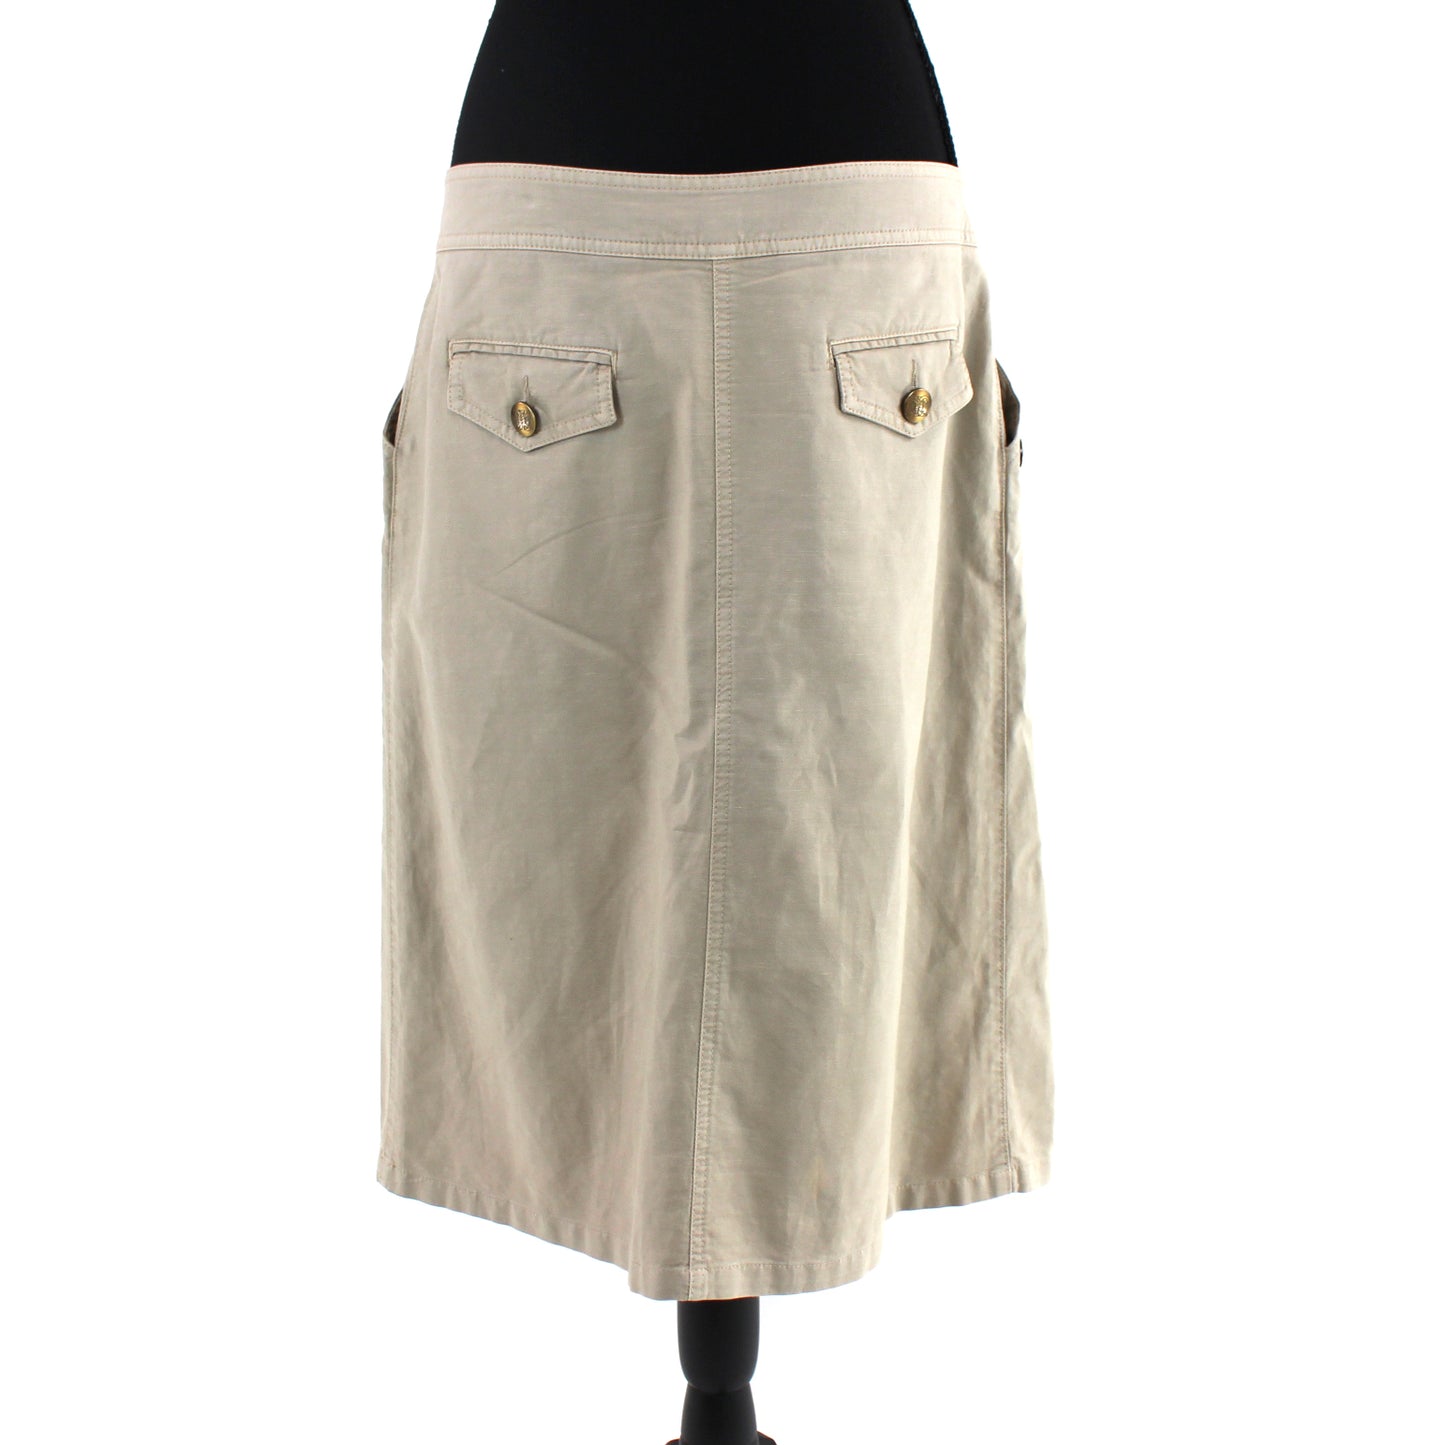 Burberry London A-Line Skirt